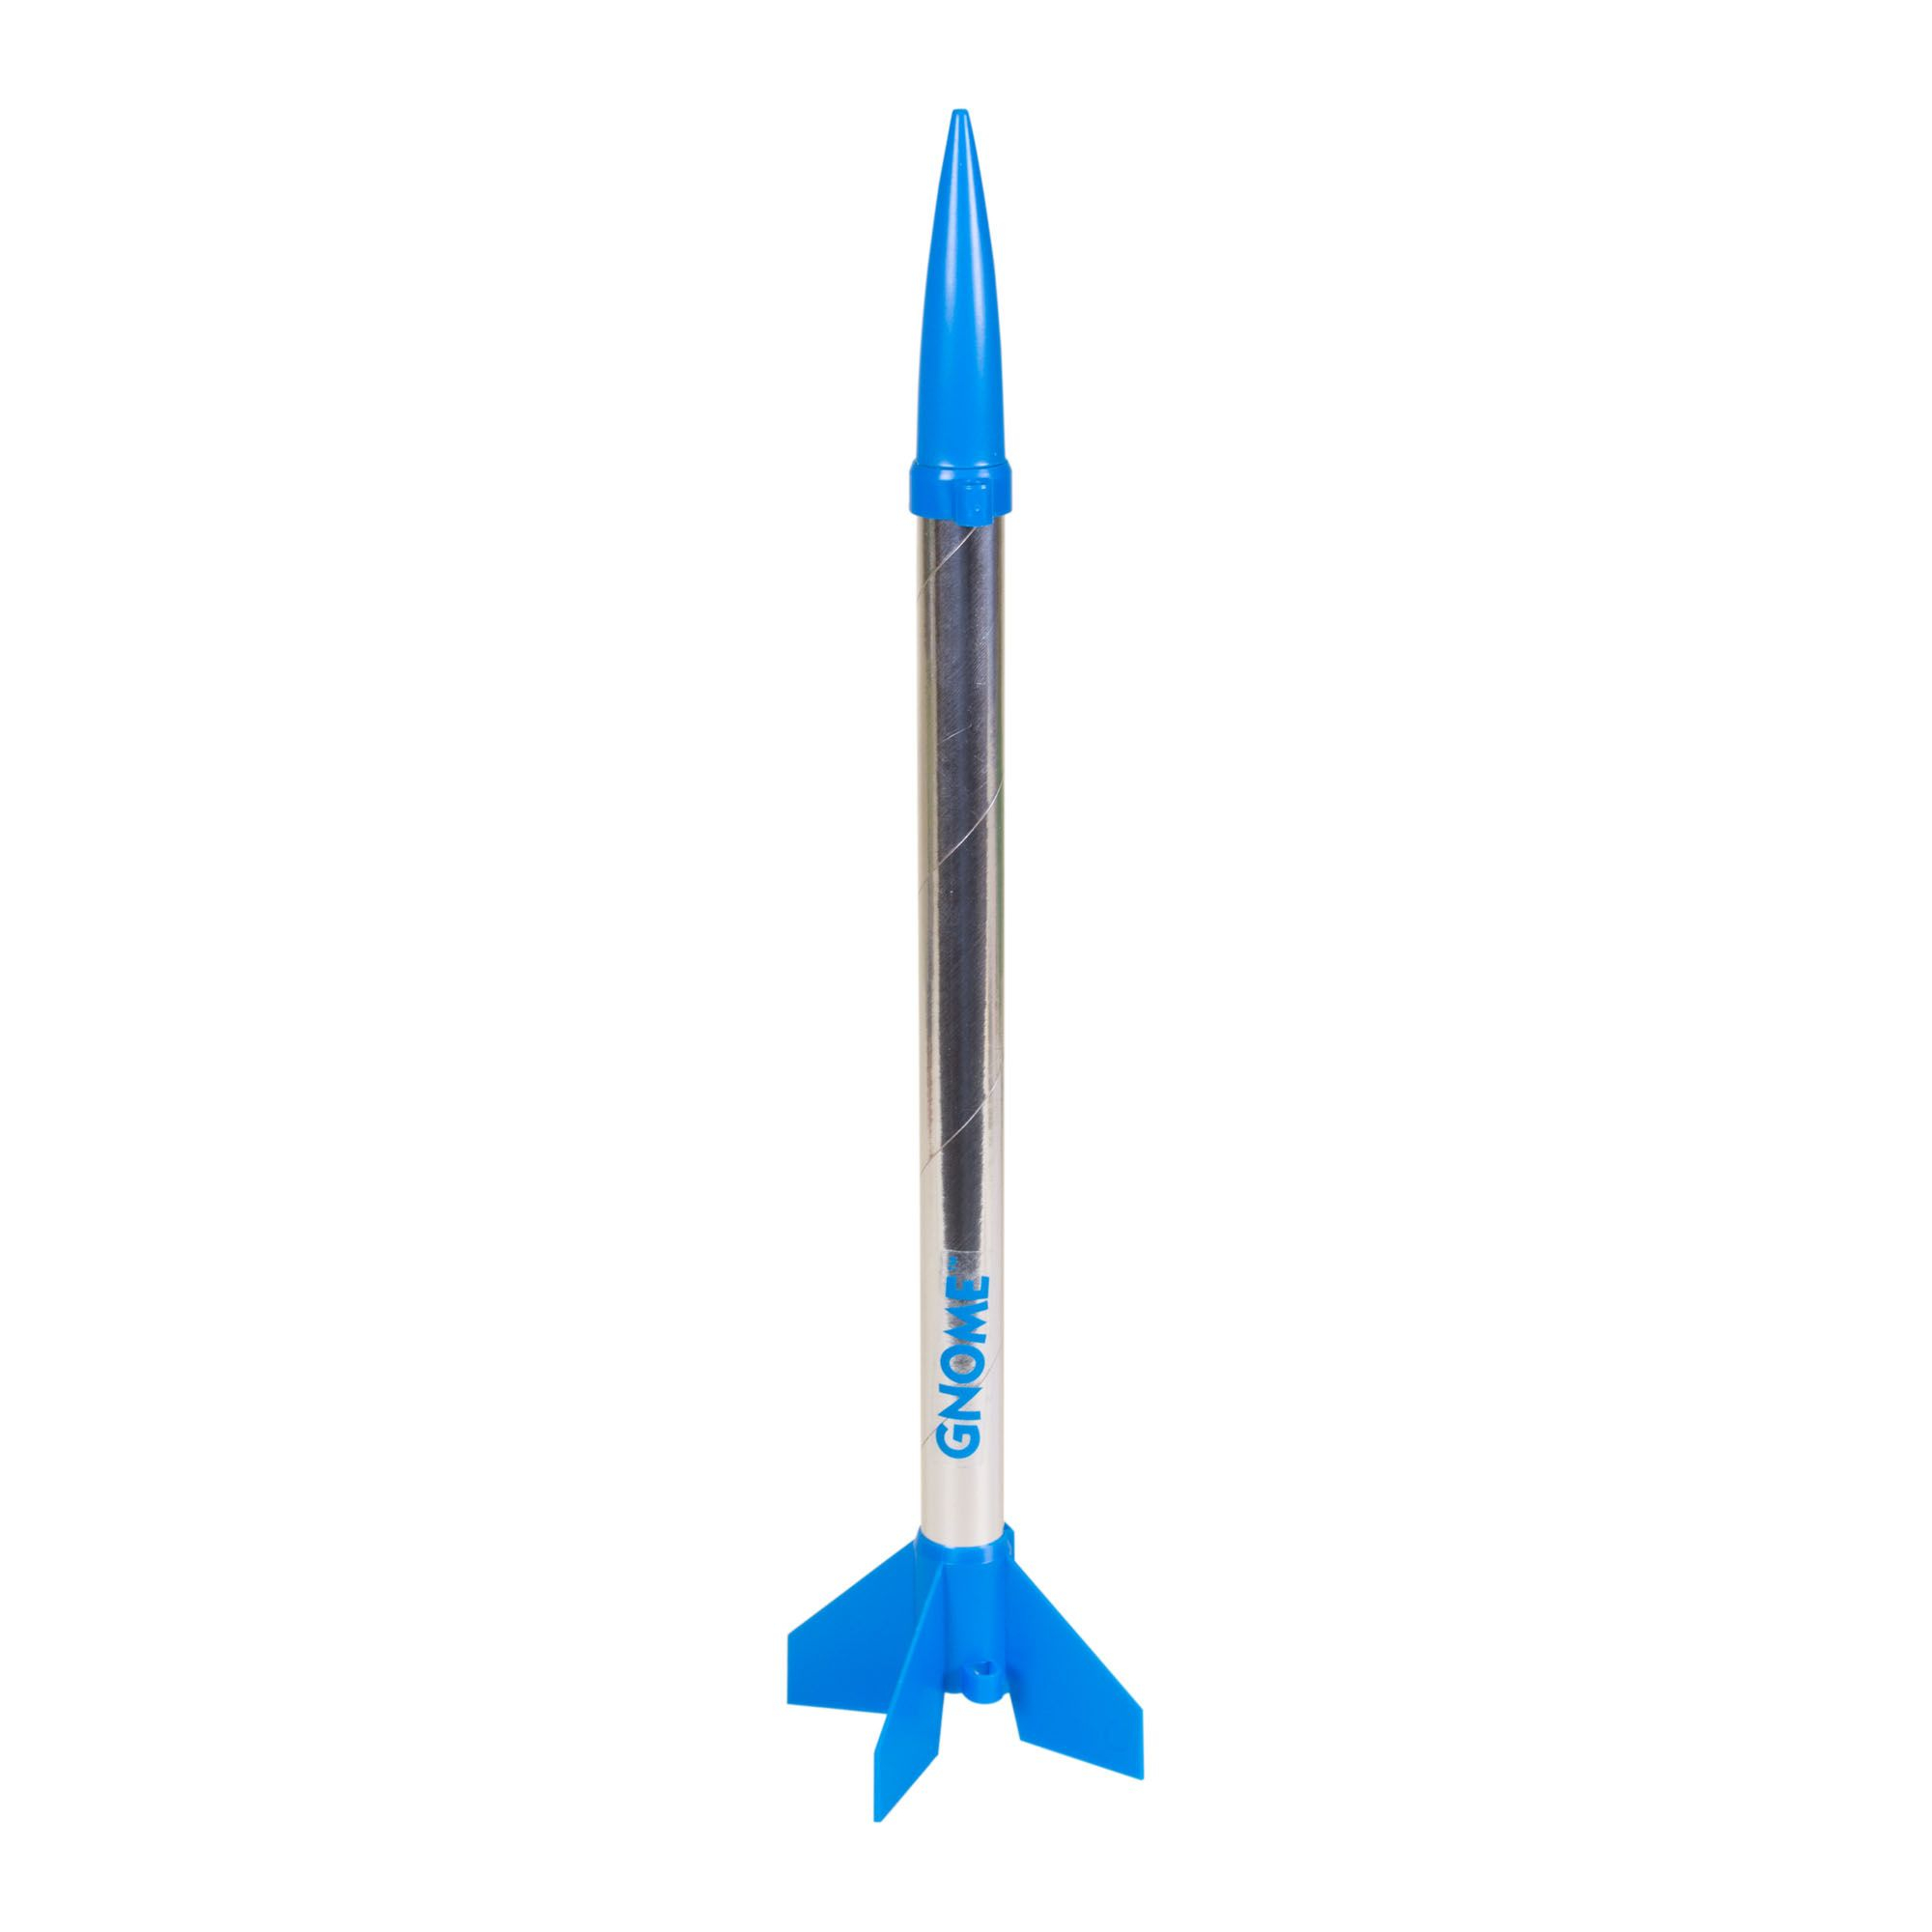 Estes 886 Gnome Flying Model Rocket Kit 